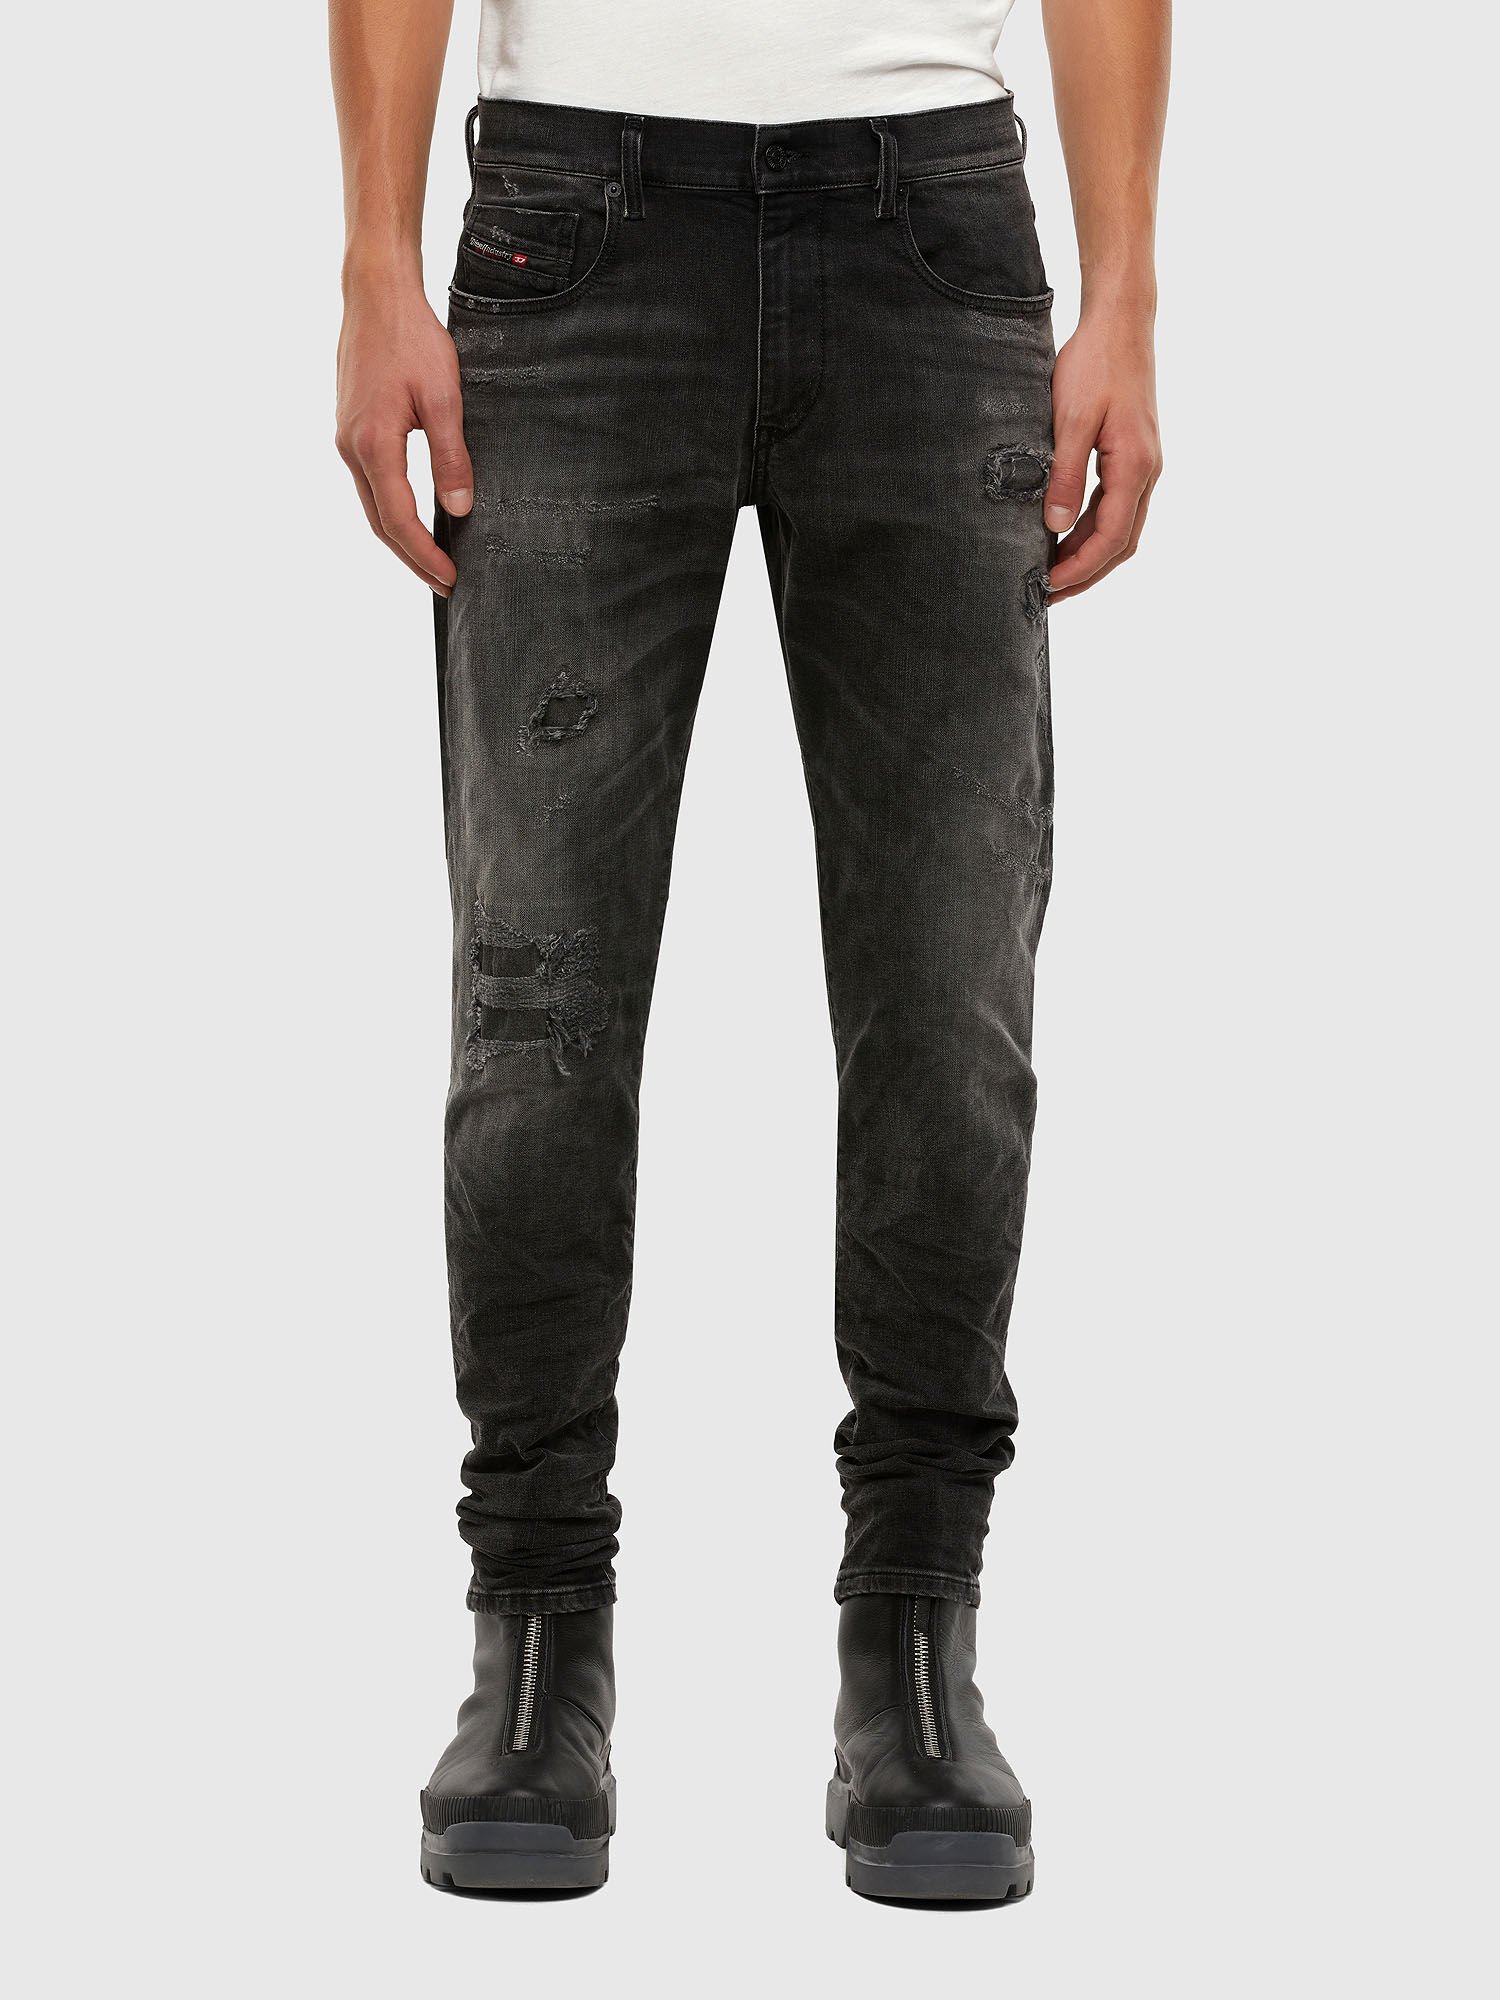 D-Strukt Slim Jeans 069RC: Dark Blue Wash, Treated, Stretch Fabric